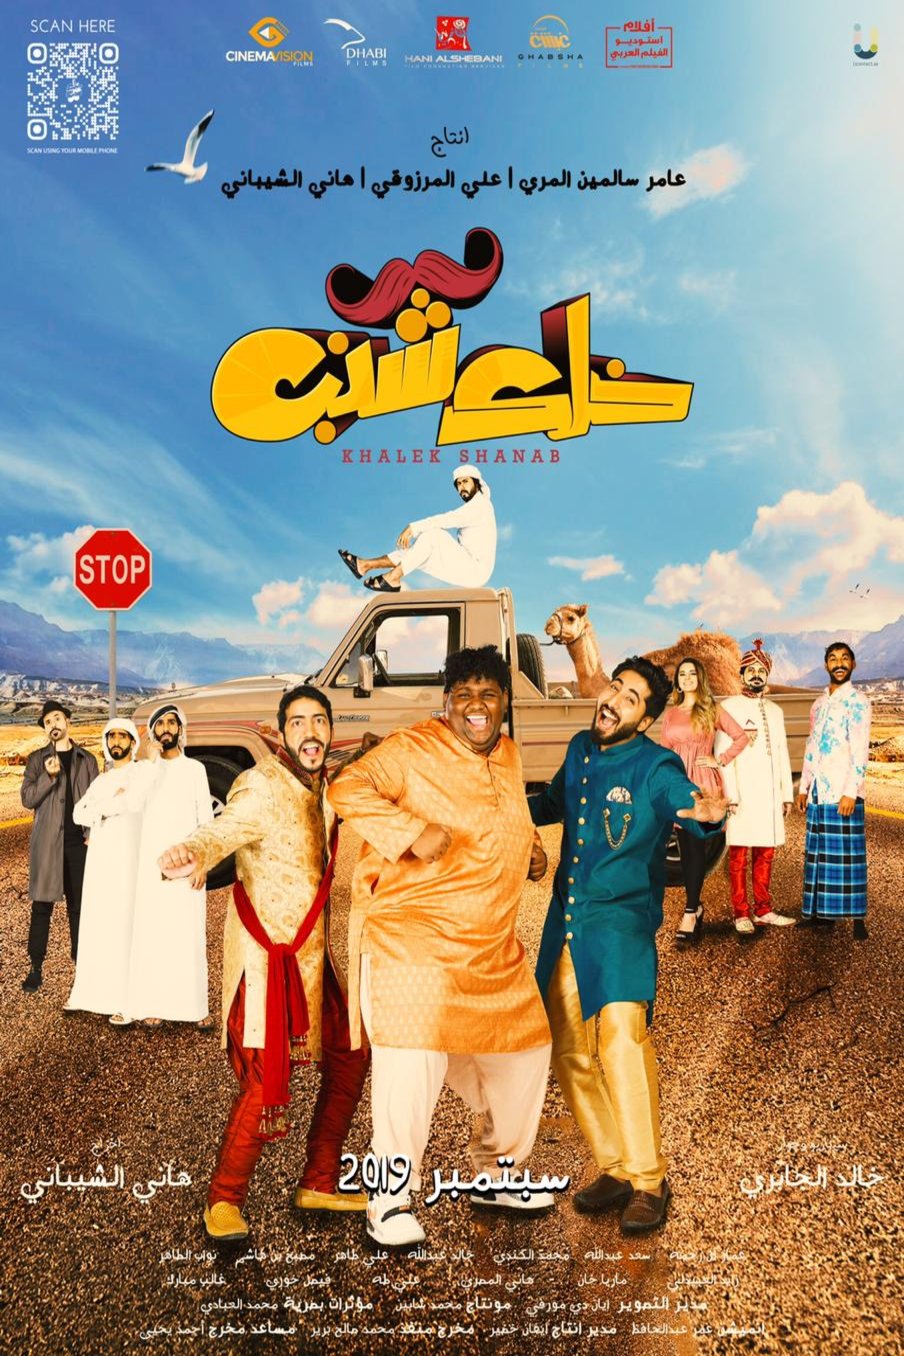 L'affiche originale du film Kalek Shanab en arabe